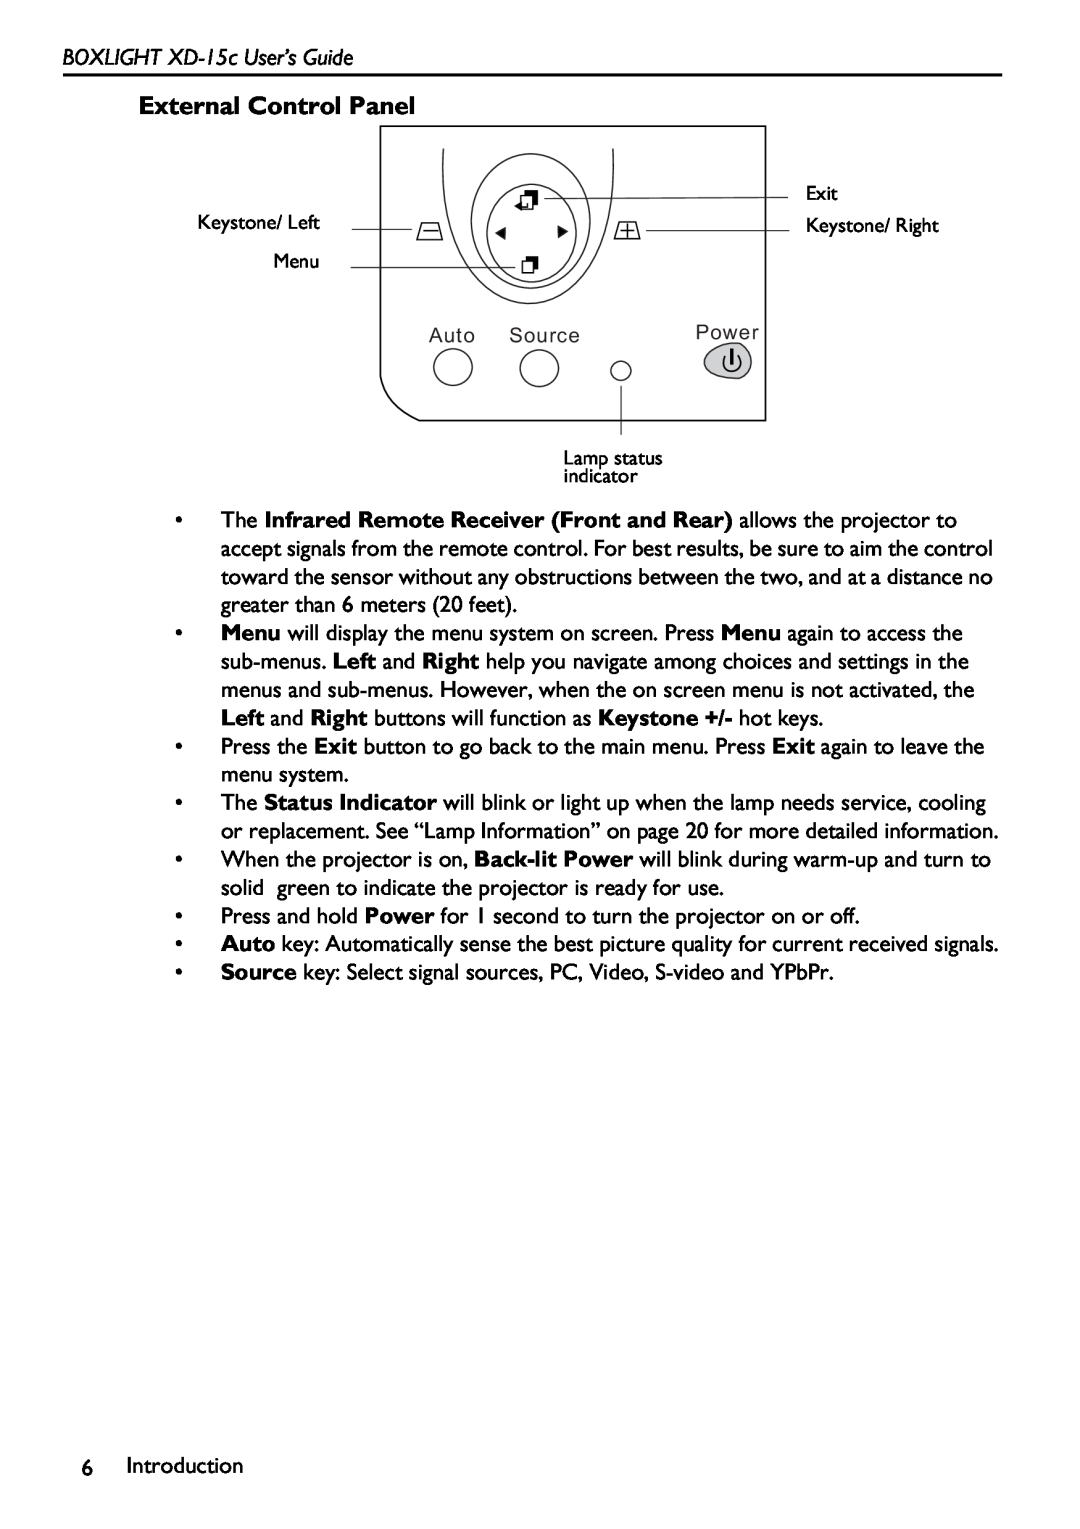 BOXLIGHT manual External Control Panel, BOXLIGHT XD-15c User’s Guide 